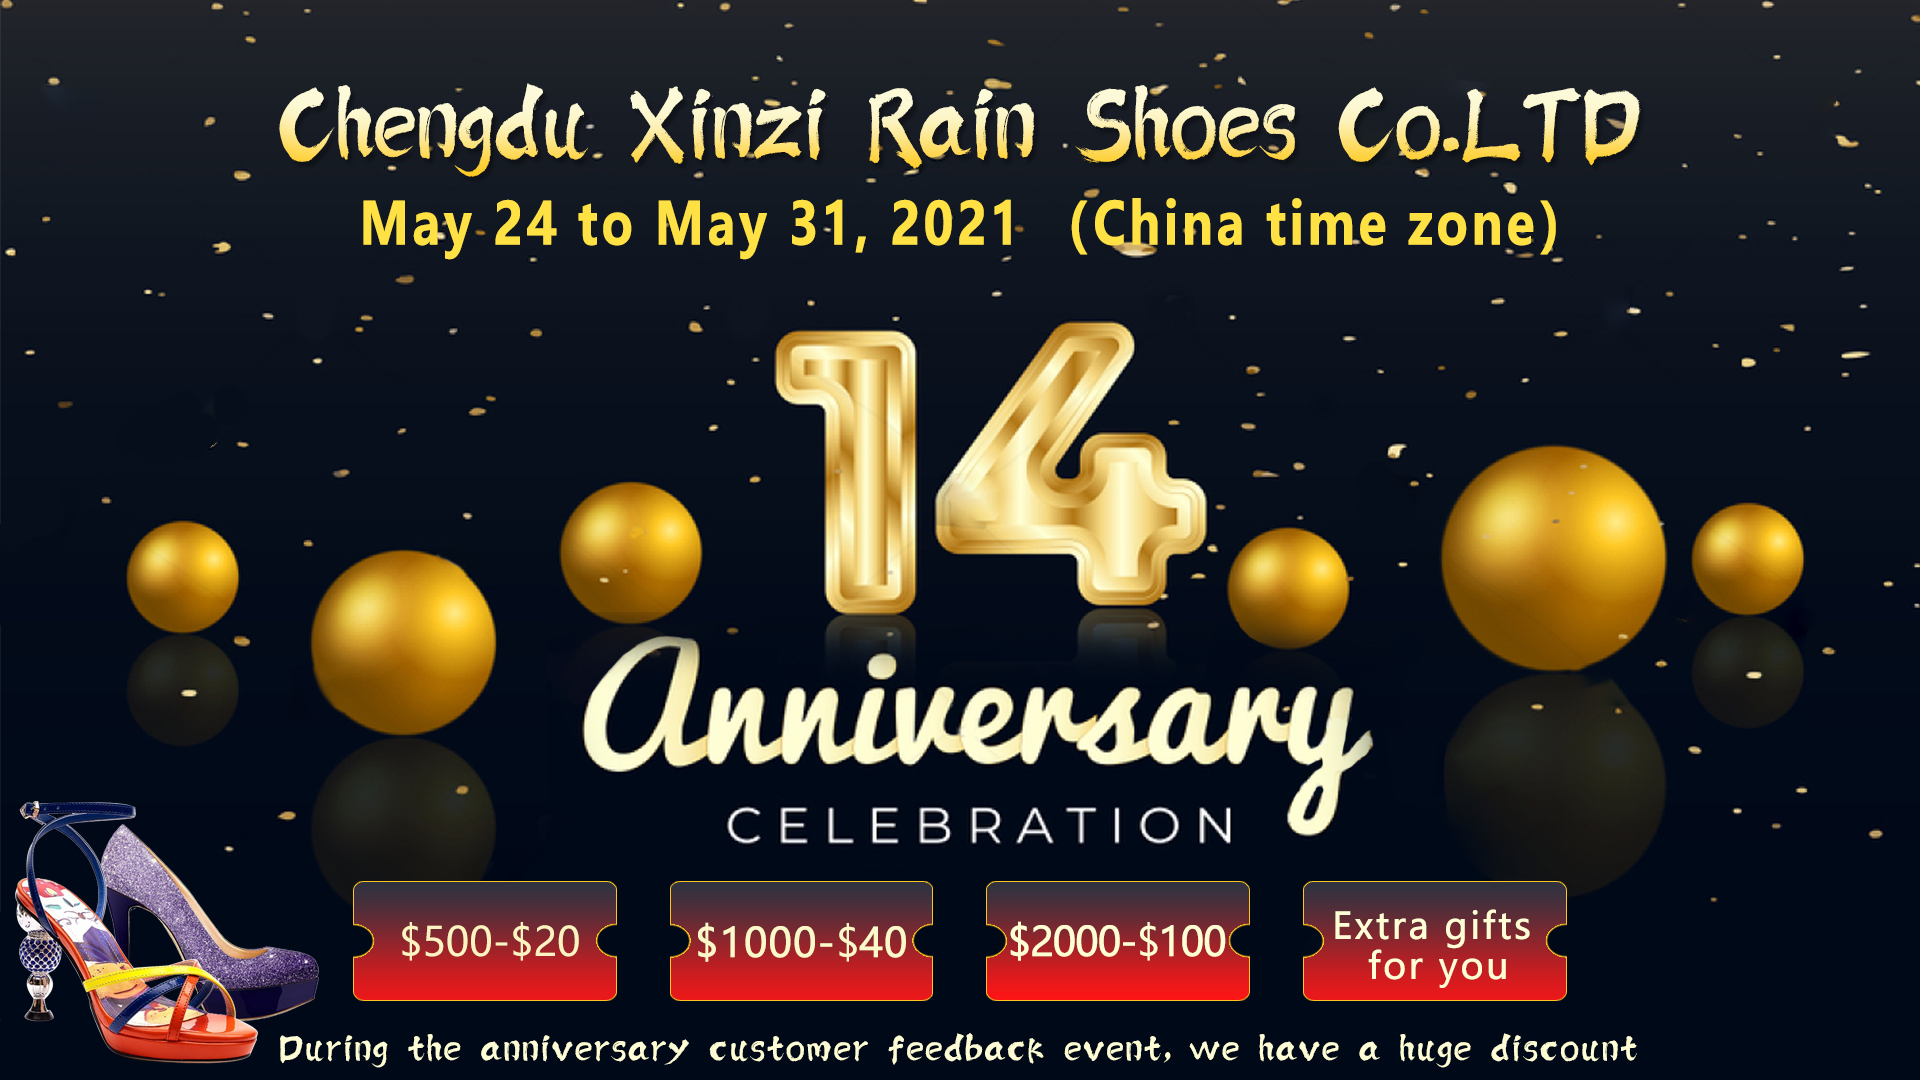 Xinzi Rain Shoes Co., Ltd., 14th Anniversary